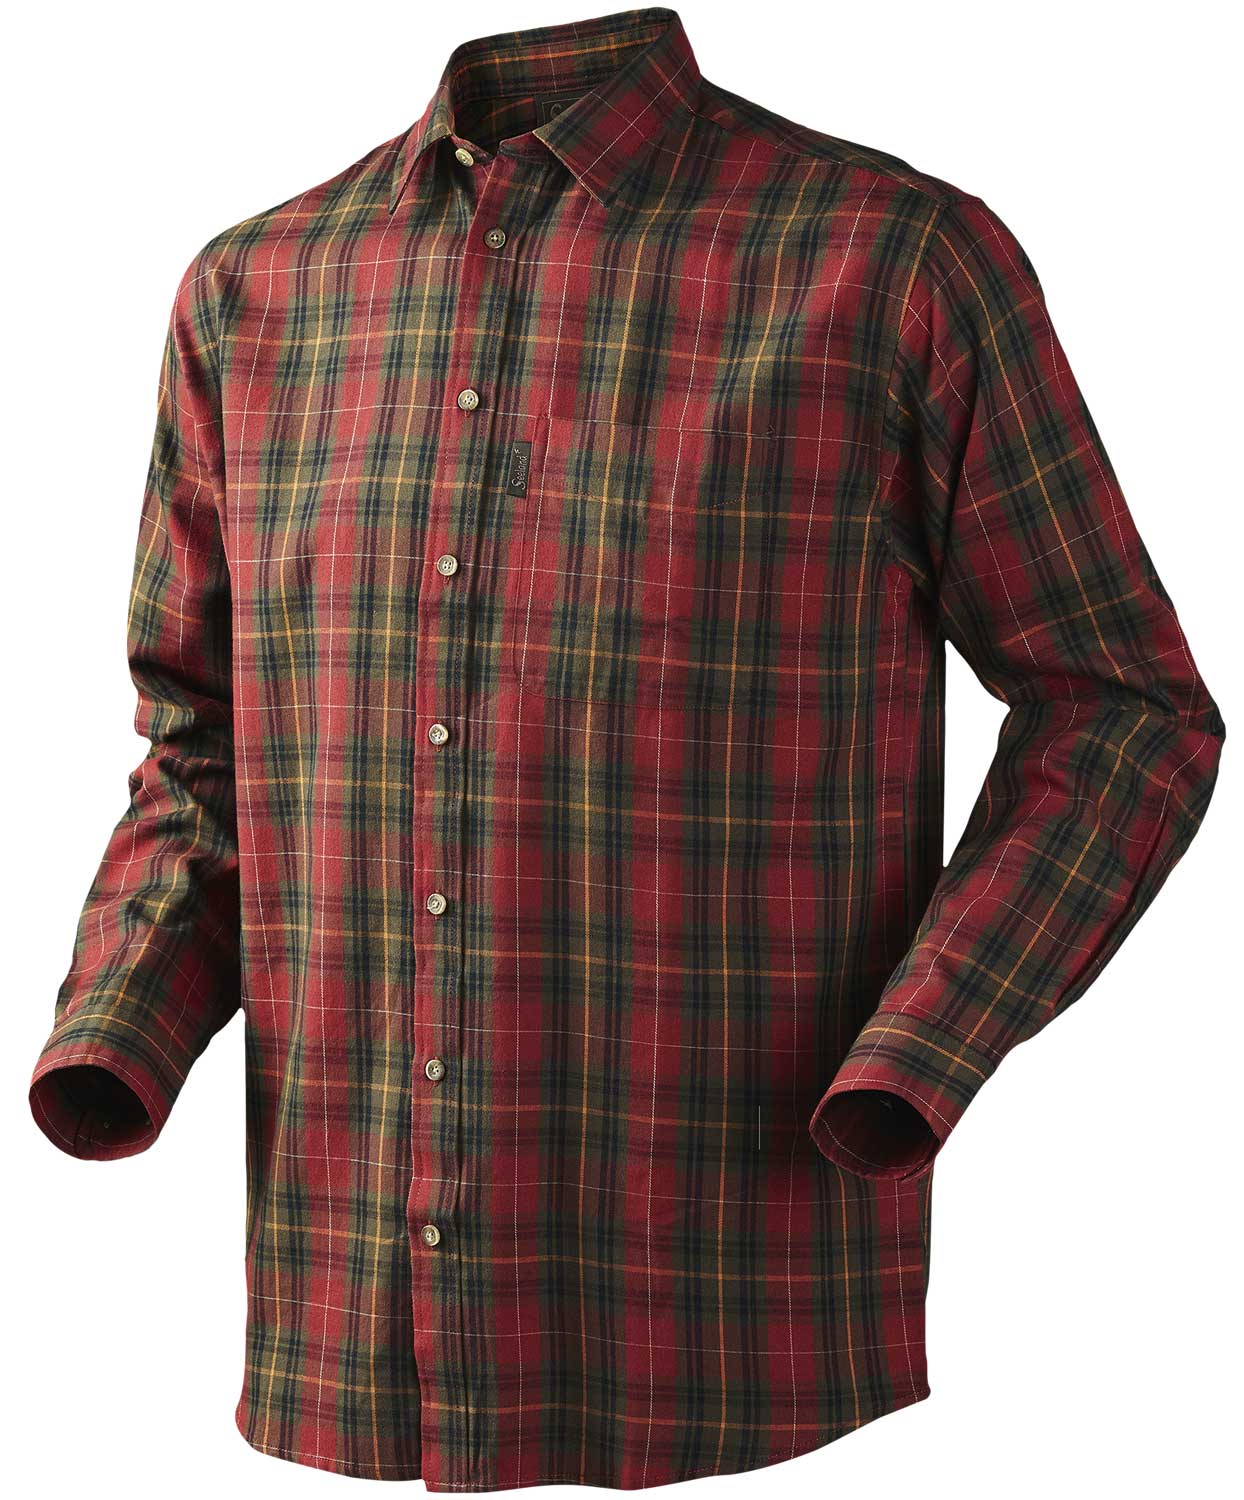 Рубашка Seeland Pilton shirt spice red check - фото 1